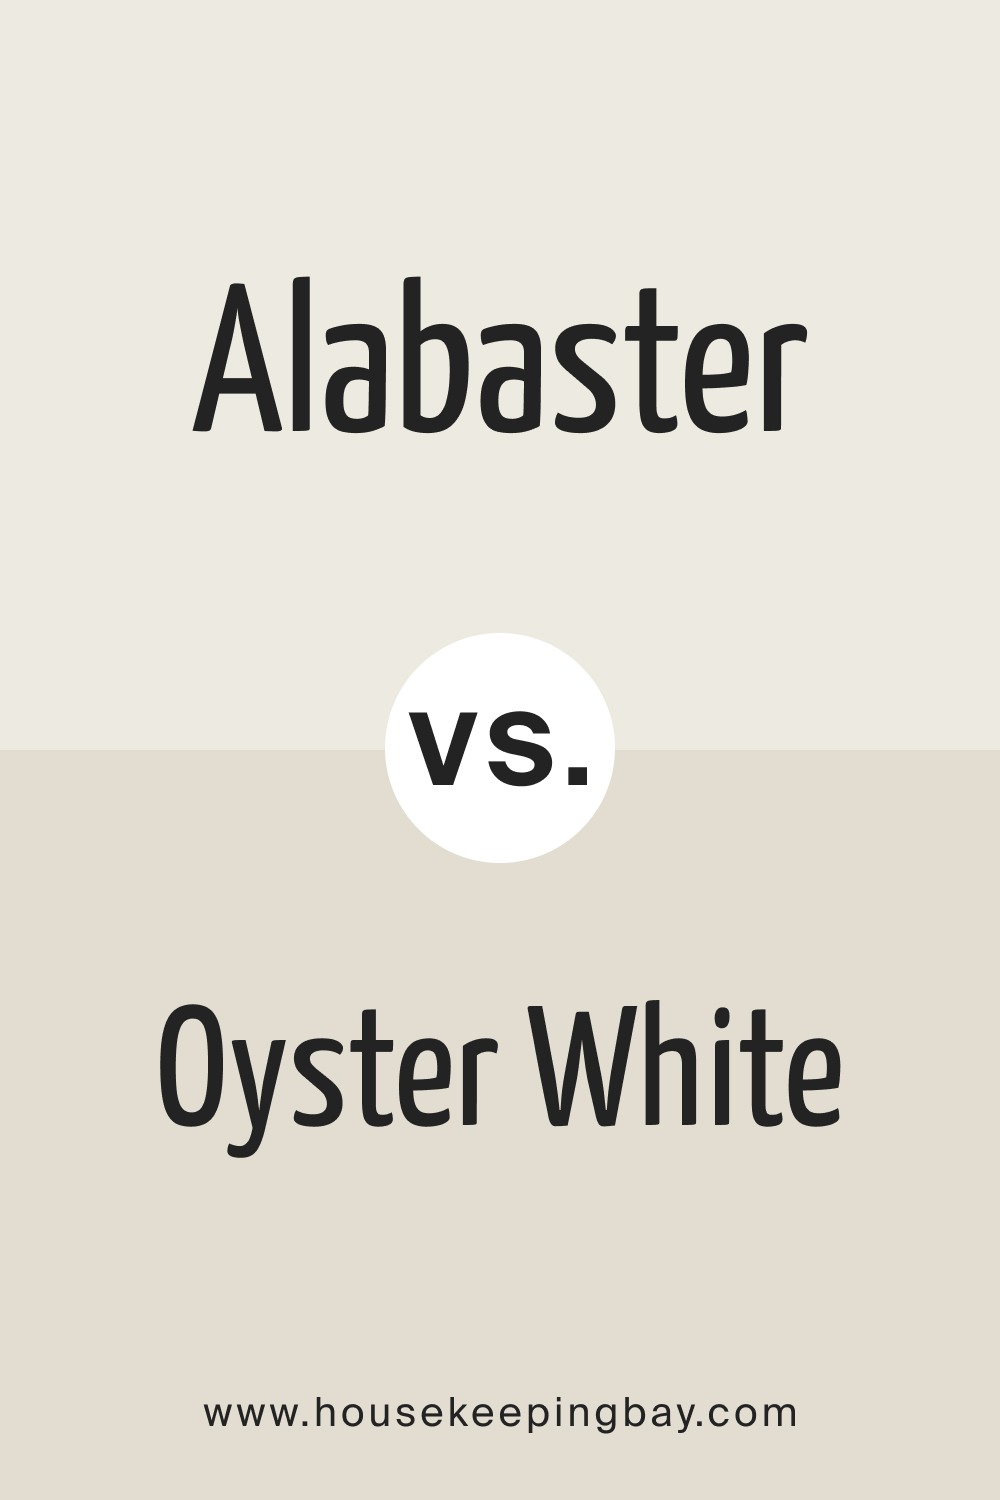 Alabaster vs. Oyster White